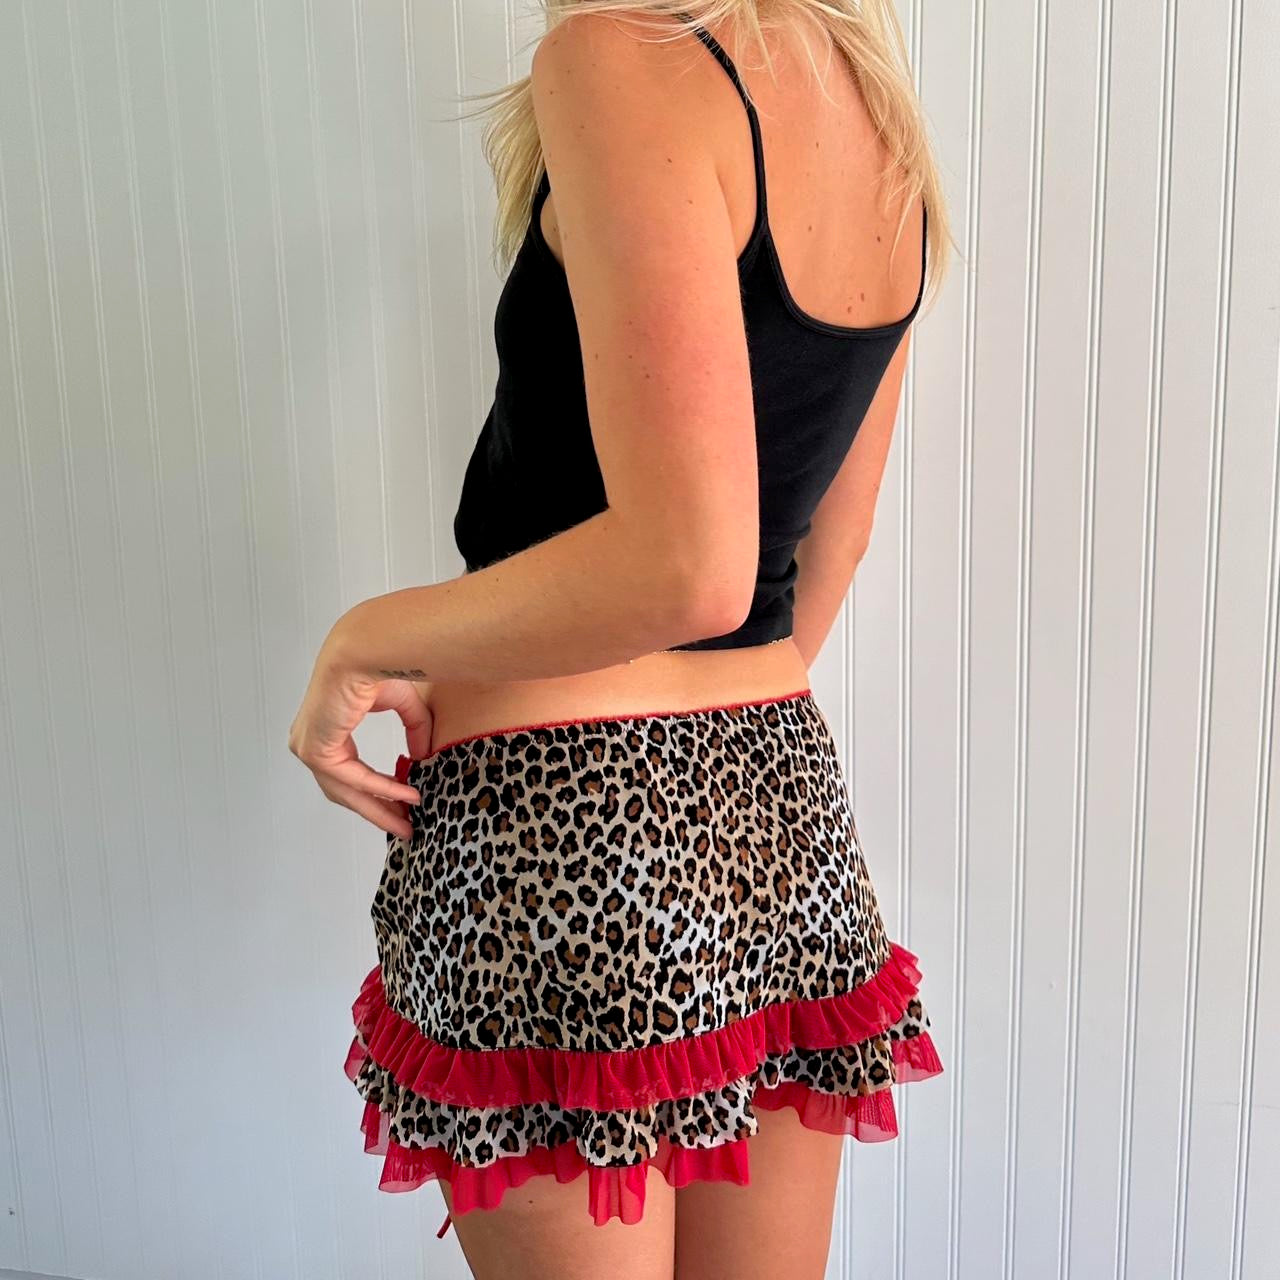 Vintage early 2000s leopard print micro mini skirt